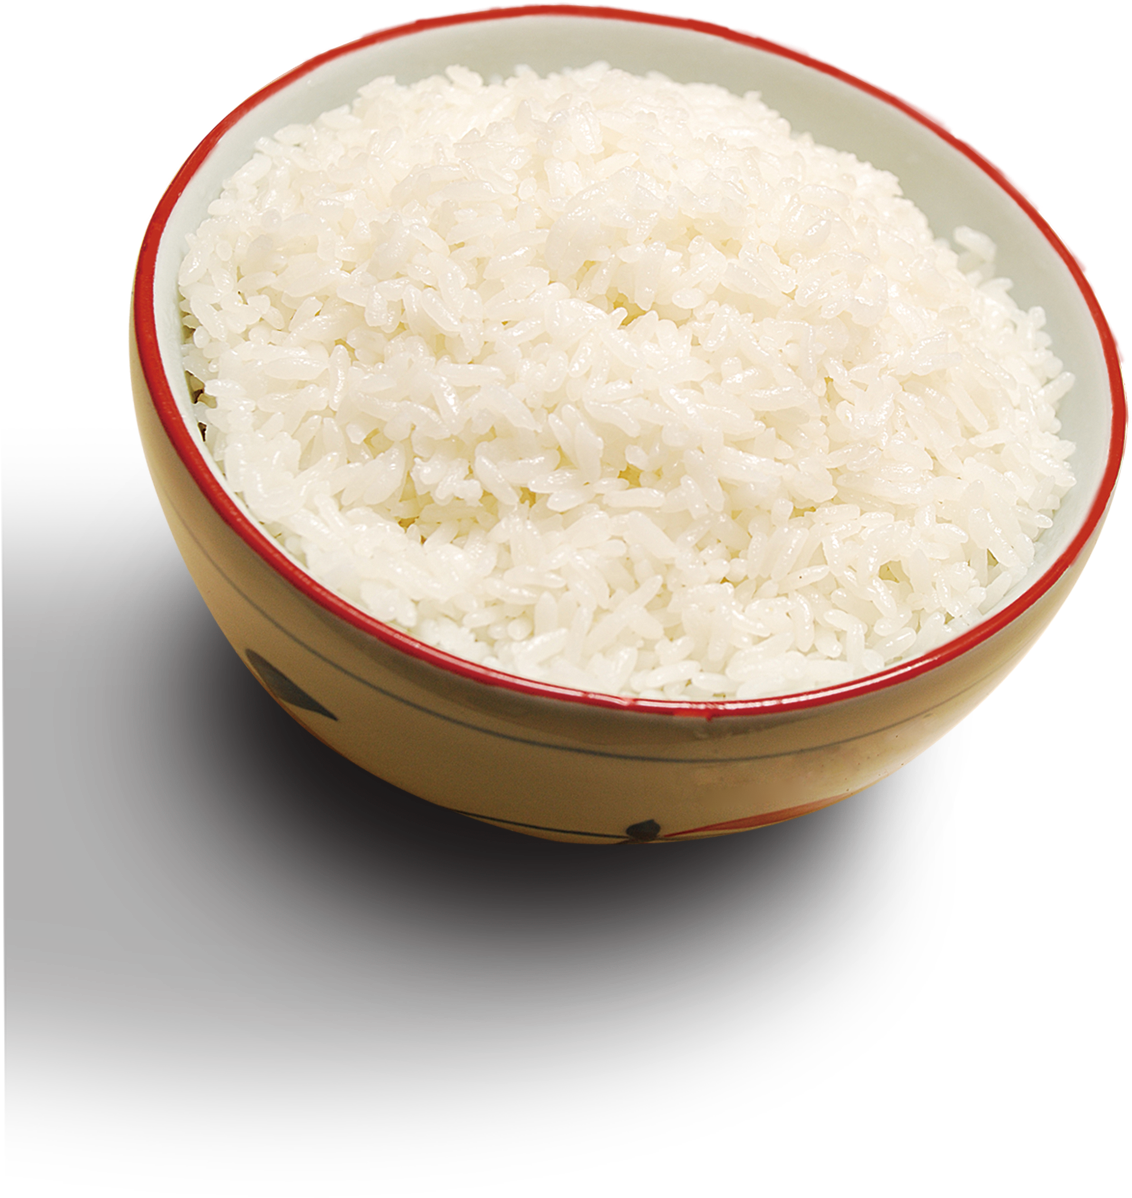 Cooked Rice White Rice Glutinous Rice Basmati - Cooked Rice White Rice Glutinous Rice Basmati (1131x1207)